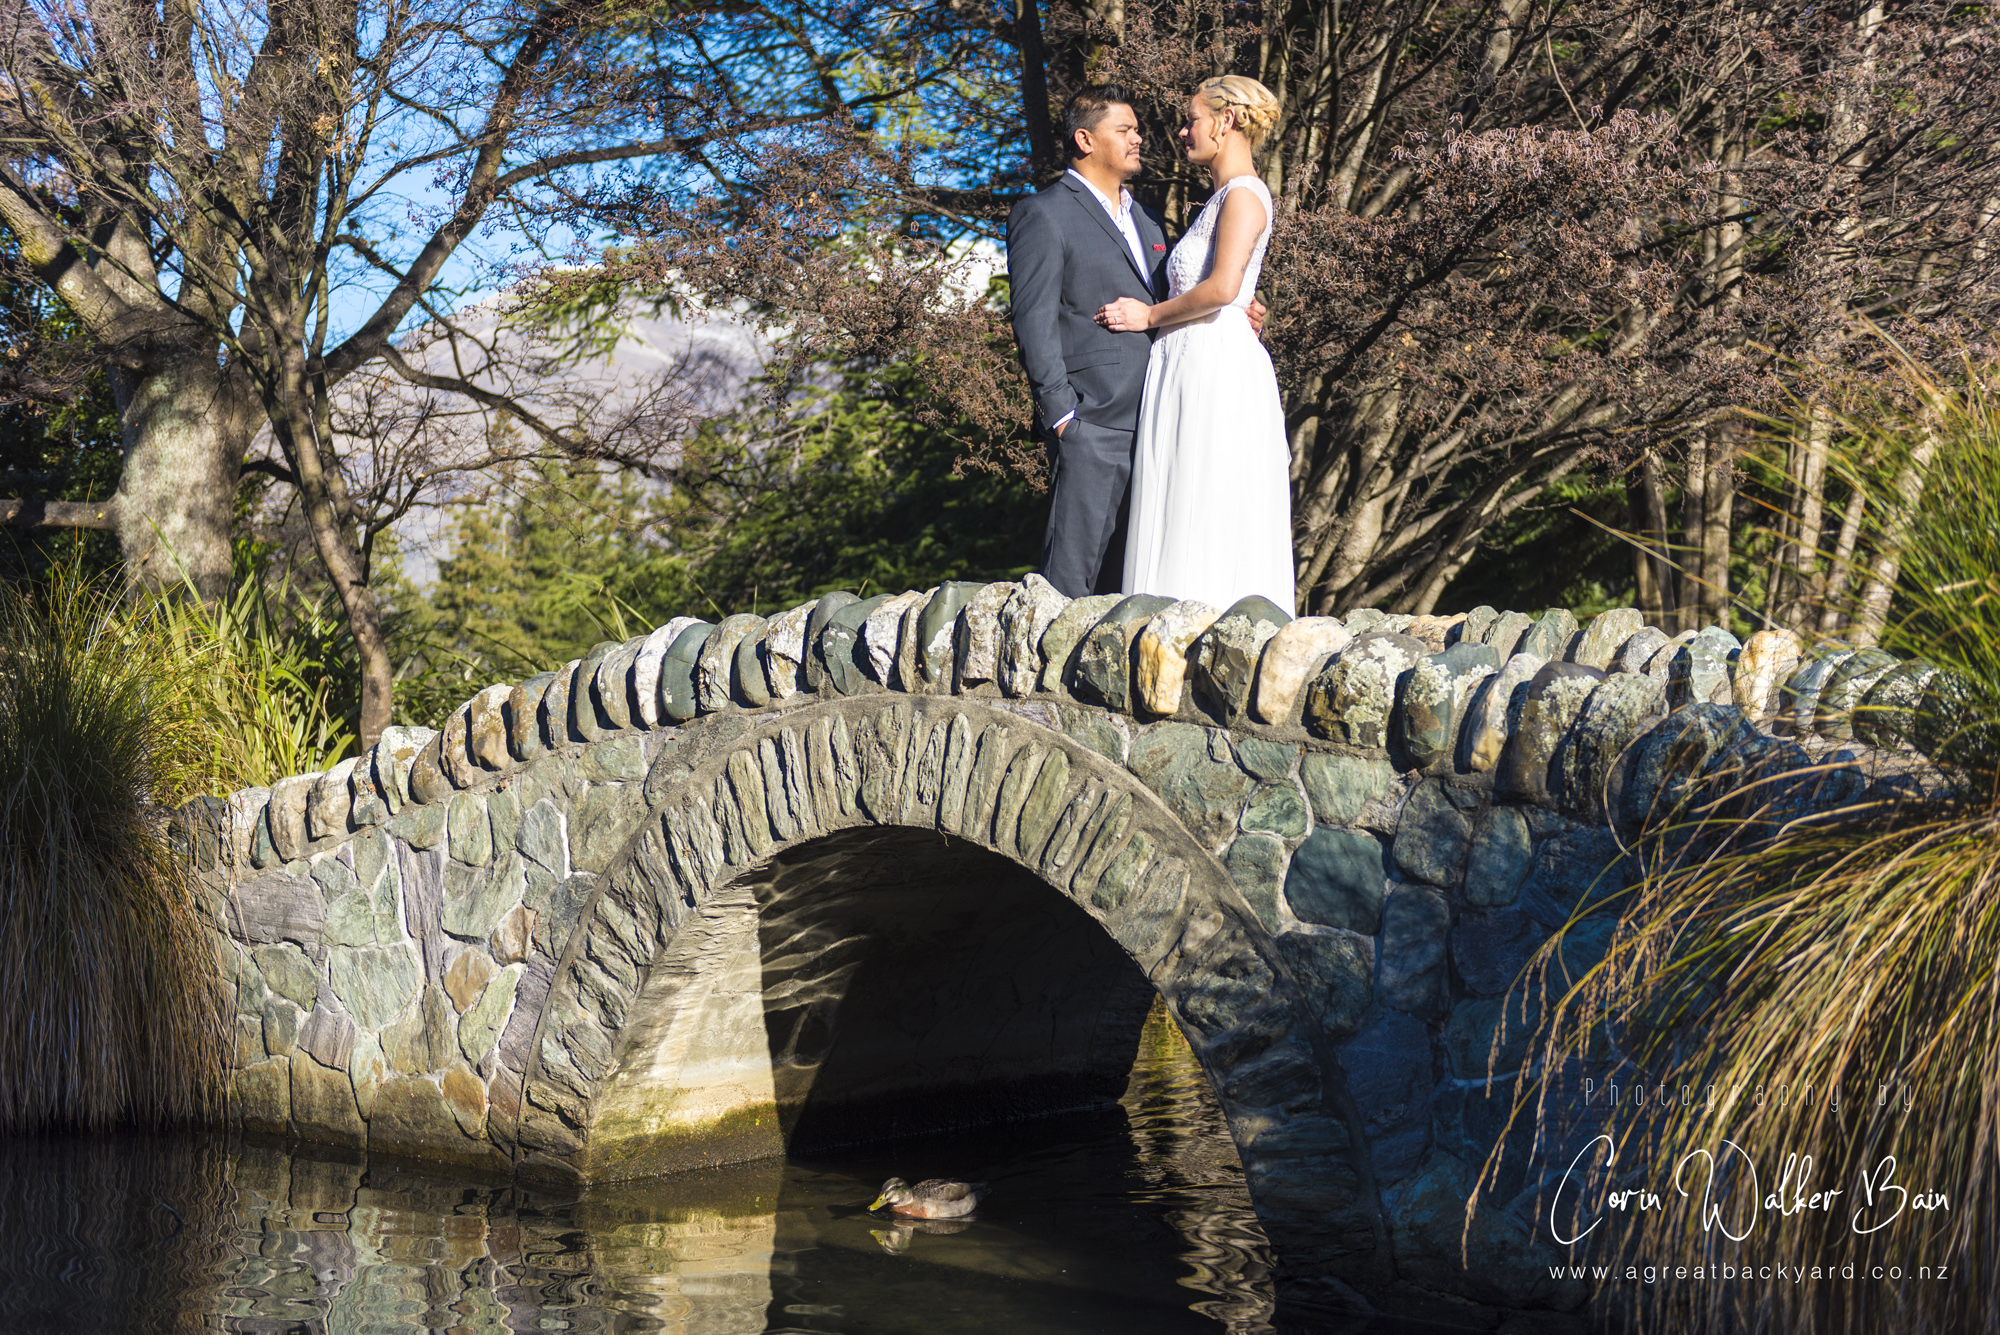 Bride and groom, Jah and Teri's Queenstown wedding by New Zealand wedding photographer Corin Walker Bain of a great backyard